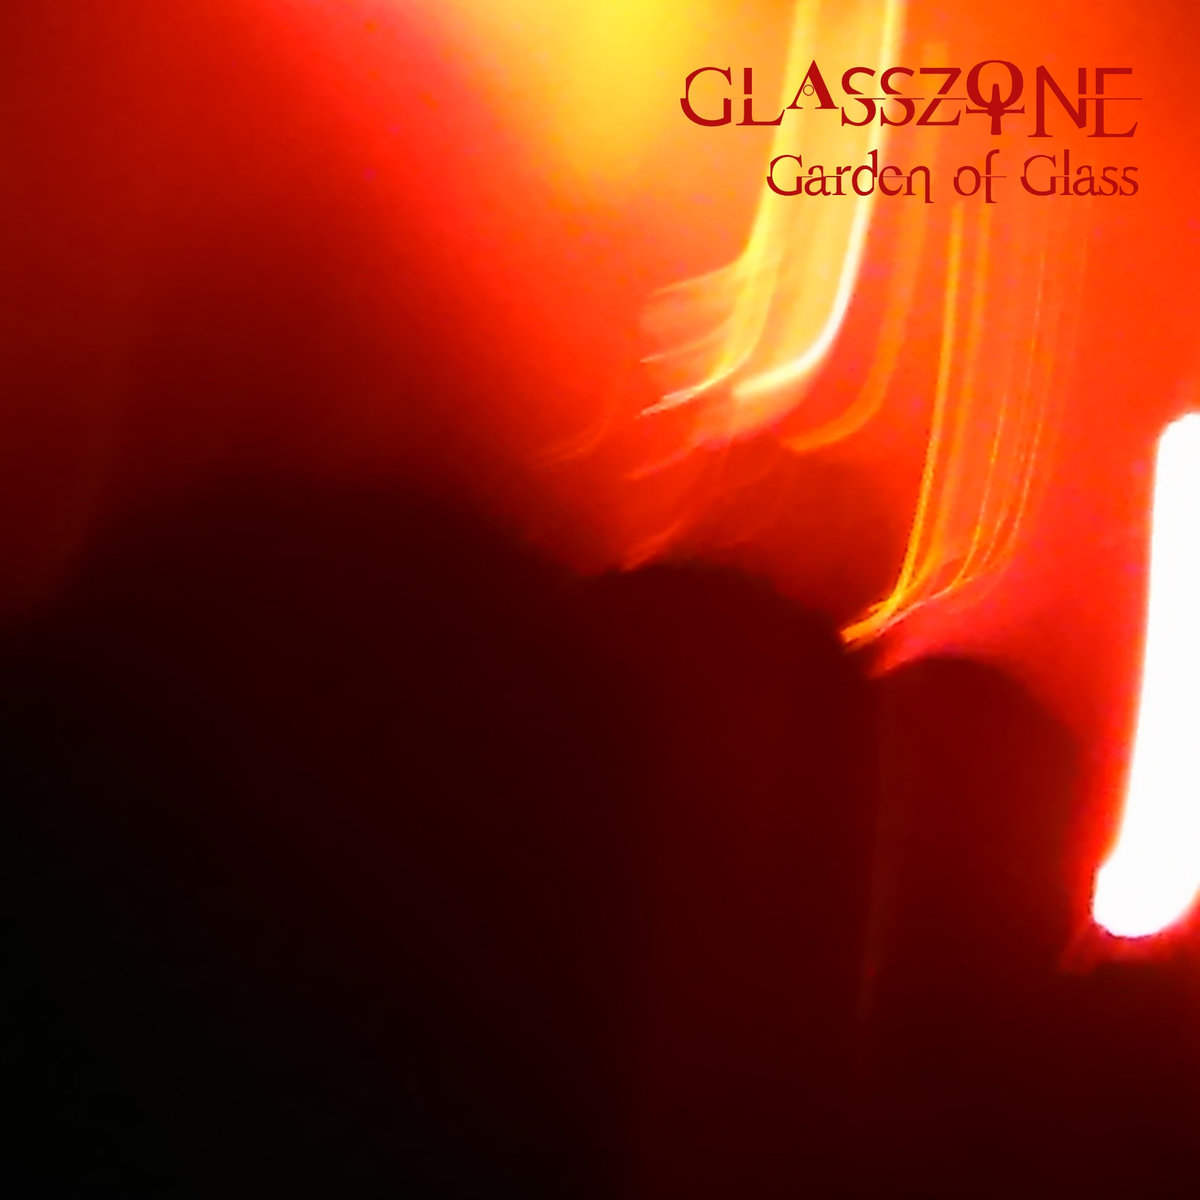 Glasszone cover